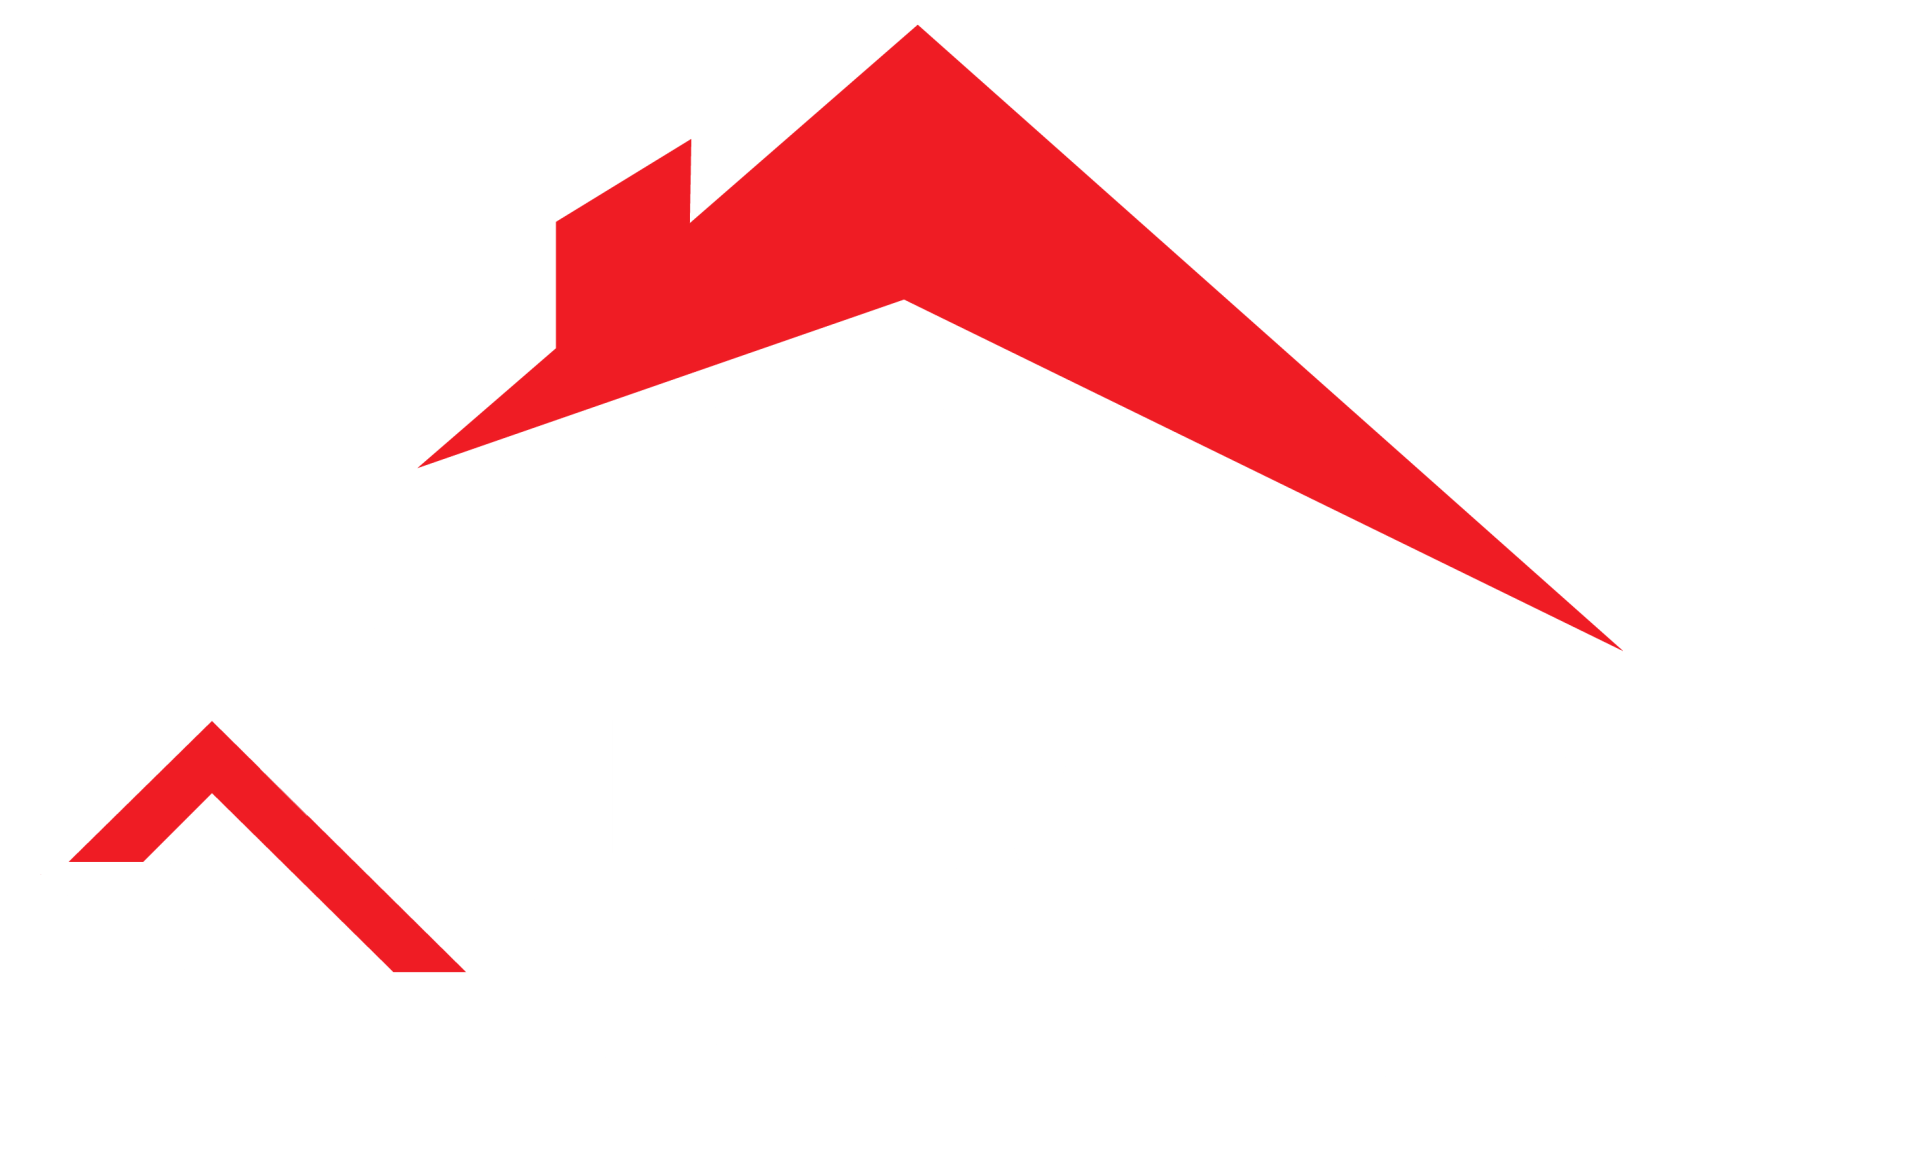 Quevedo Roofing